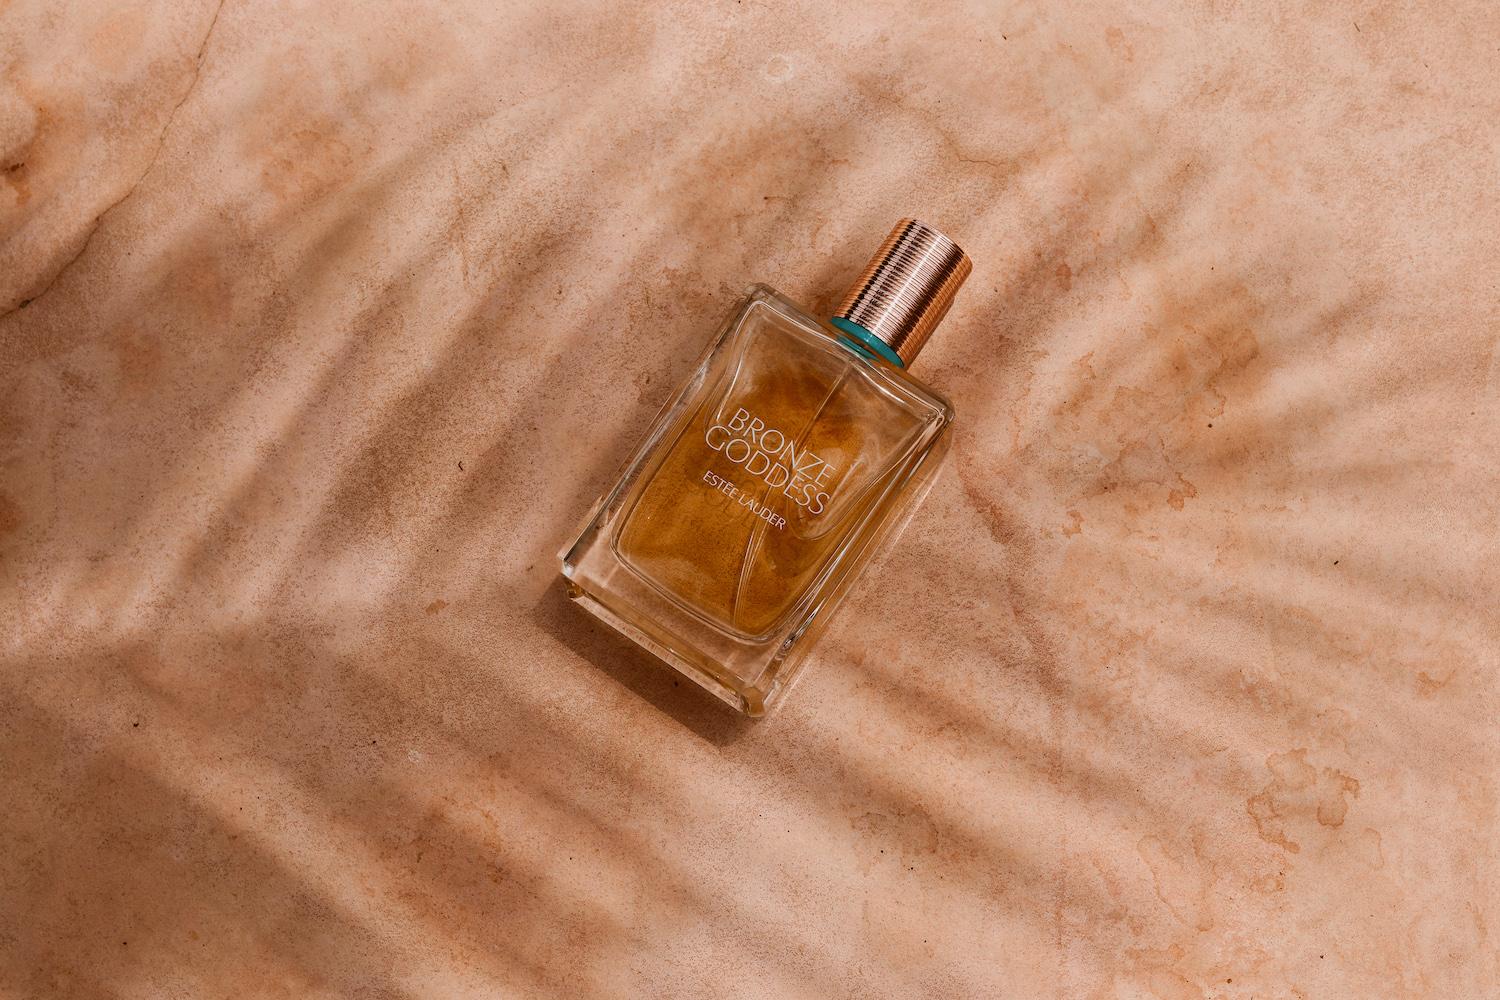 Bronze Goddess Estee Lauder Perfume Review